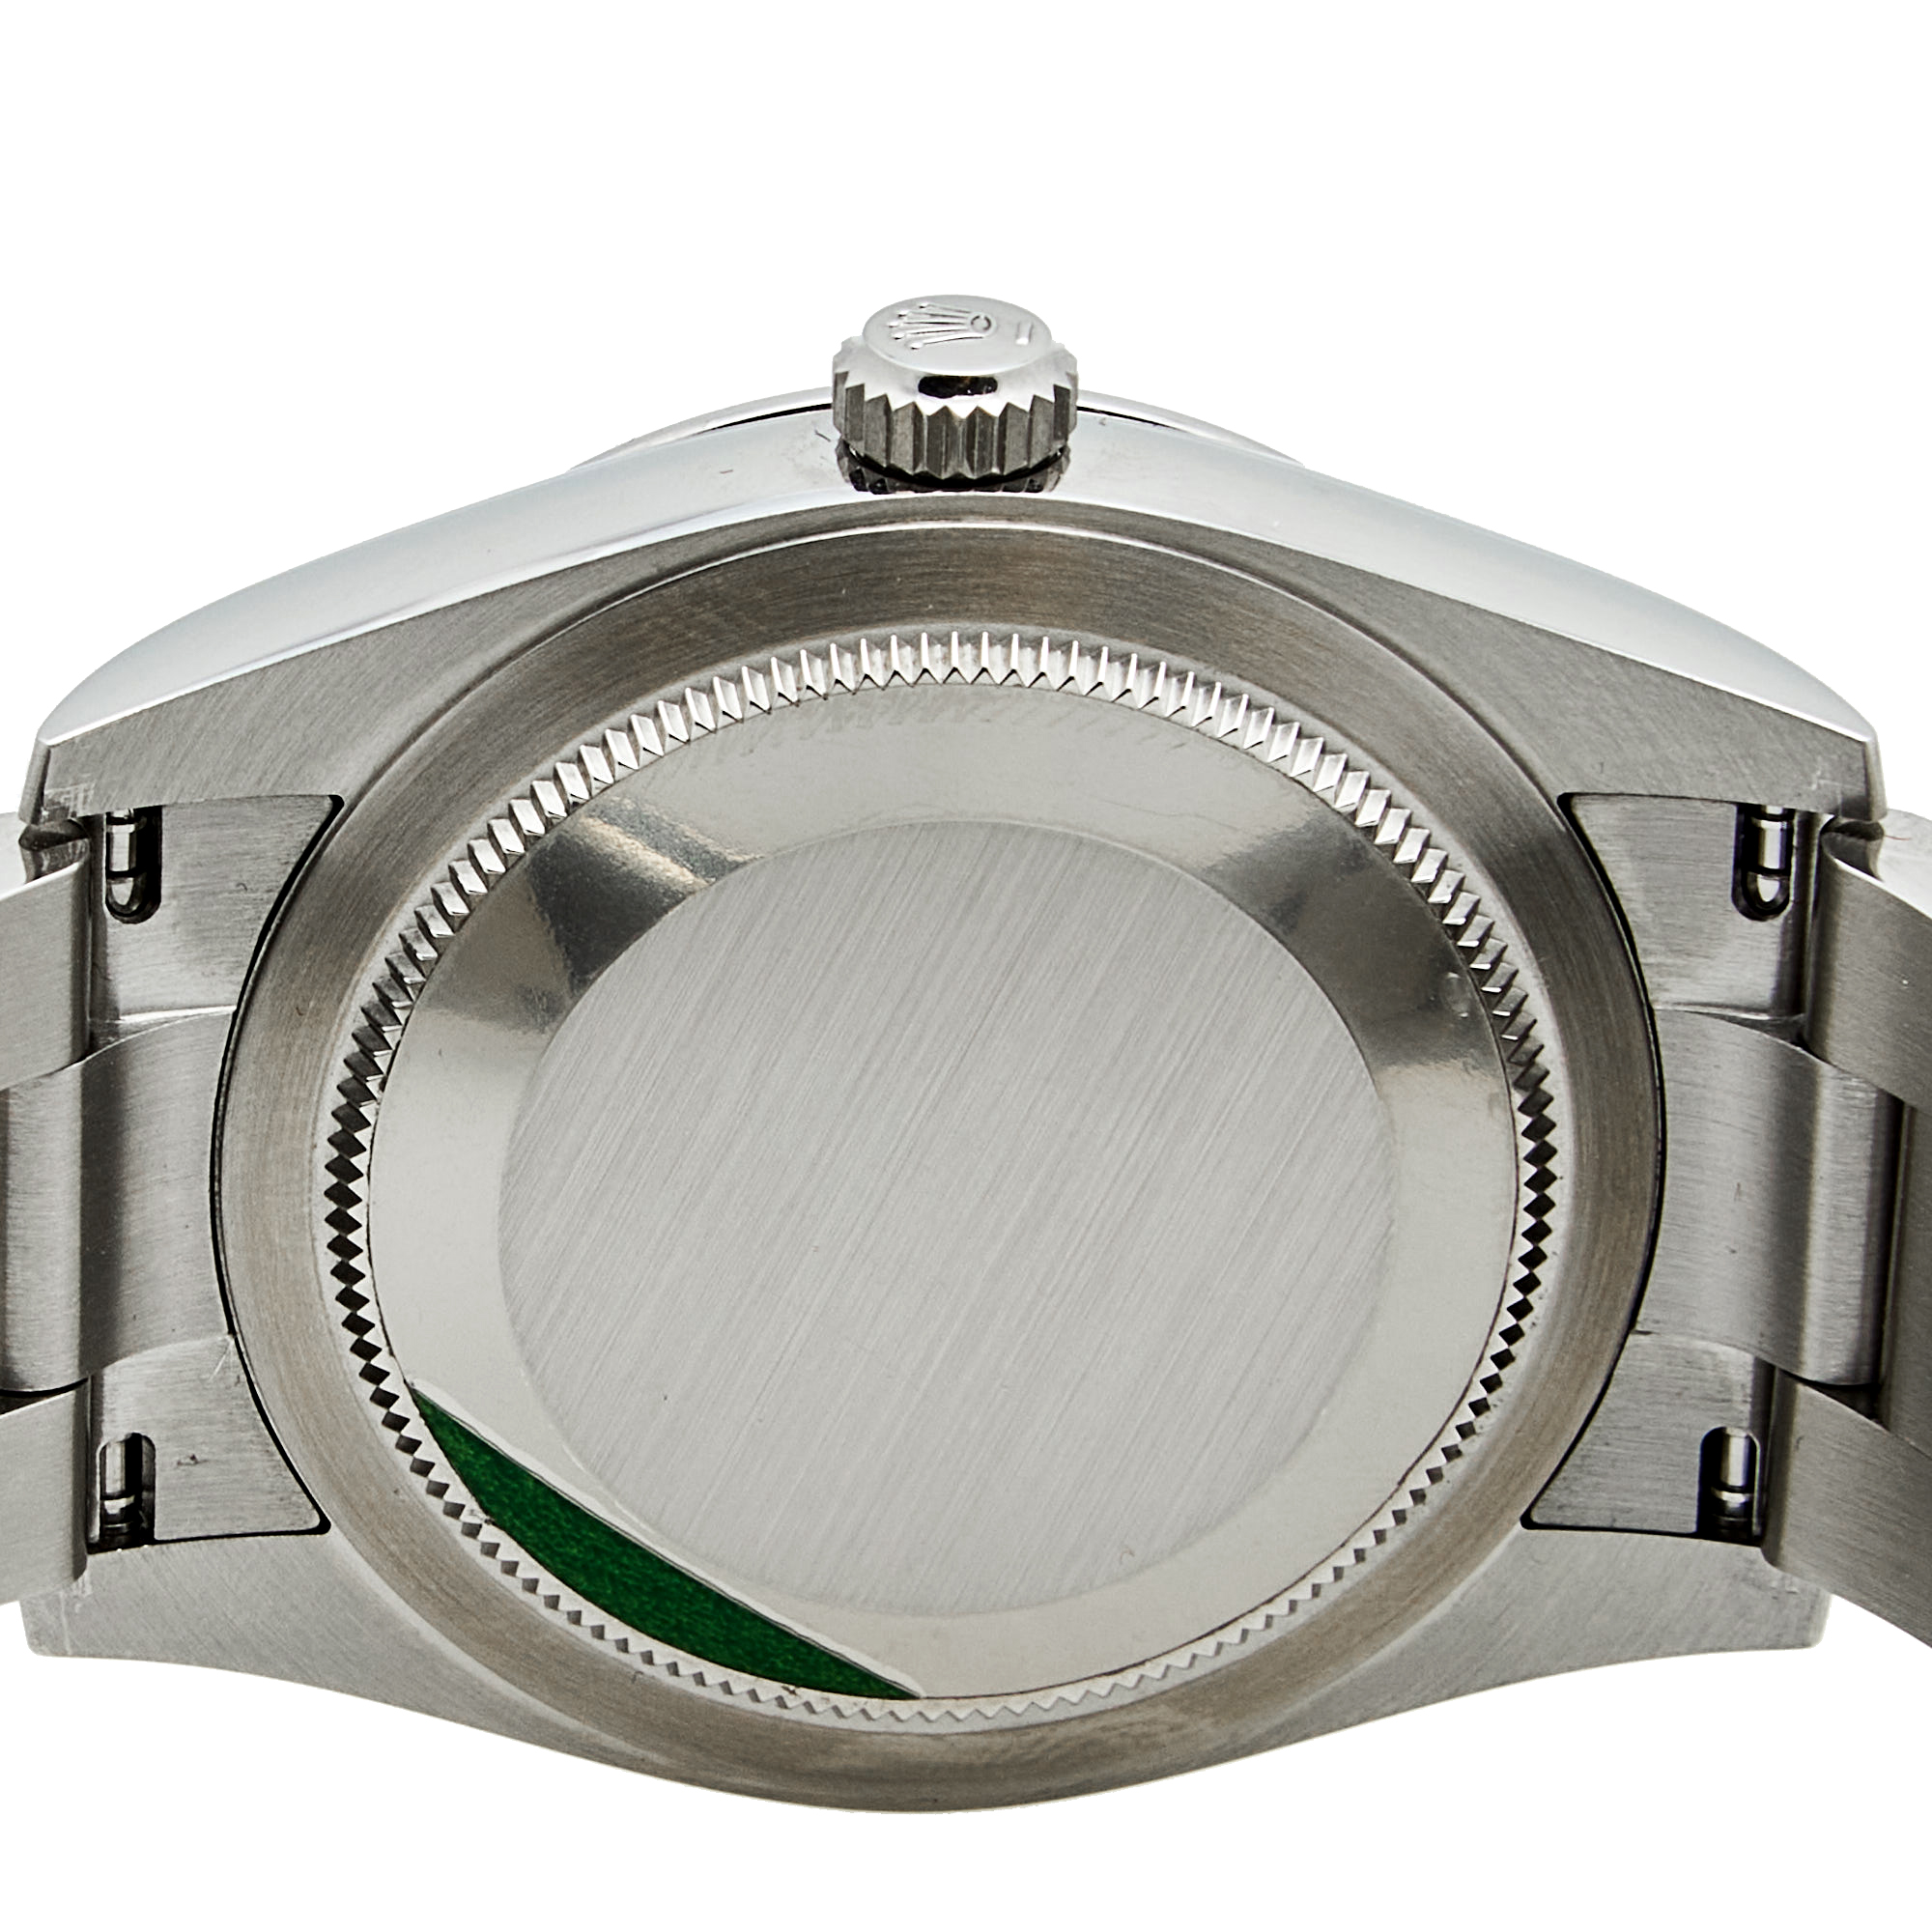 Rolex Black Stainless Steel Oyster Perpetual 124200 Women's Wristwatch 34 Mm